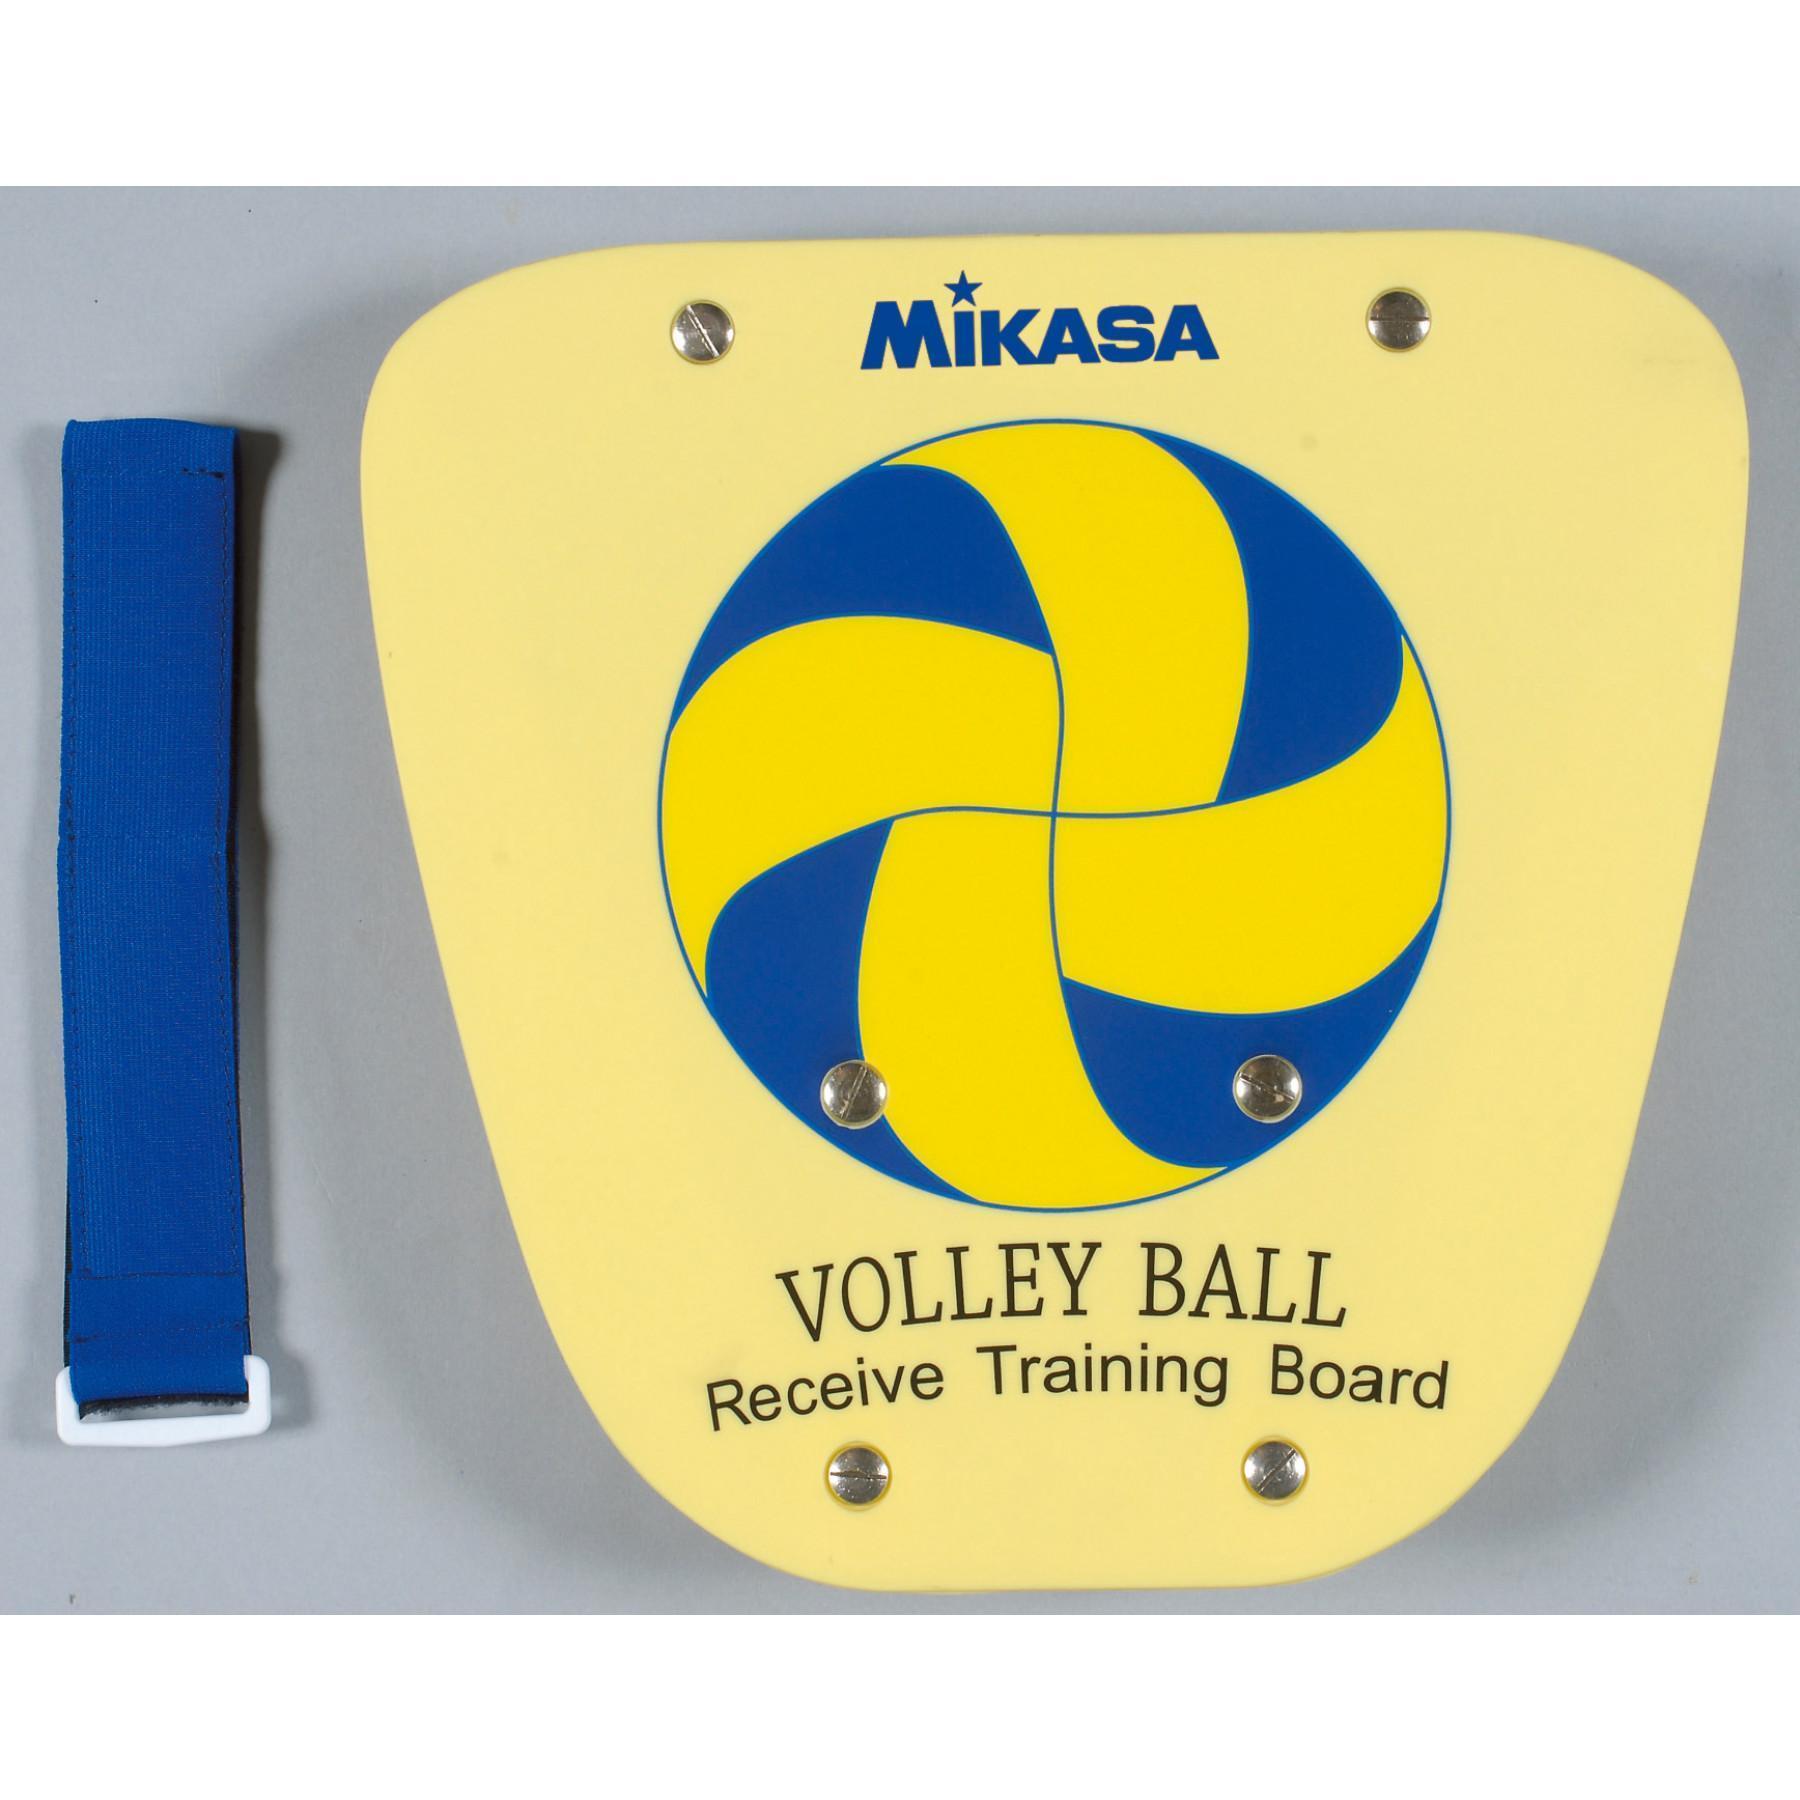 Mikassa VRE training board